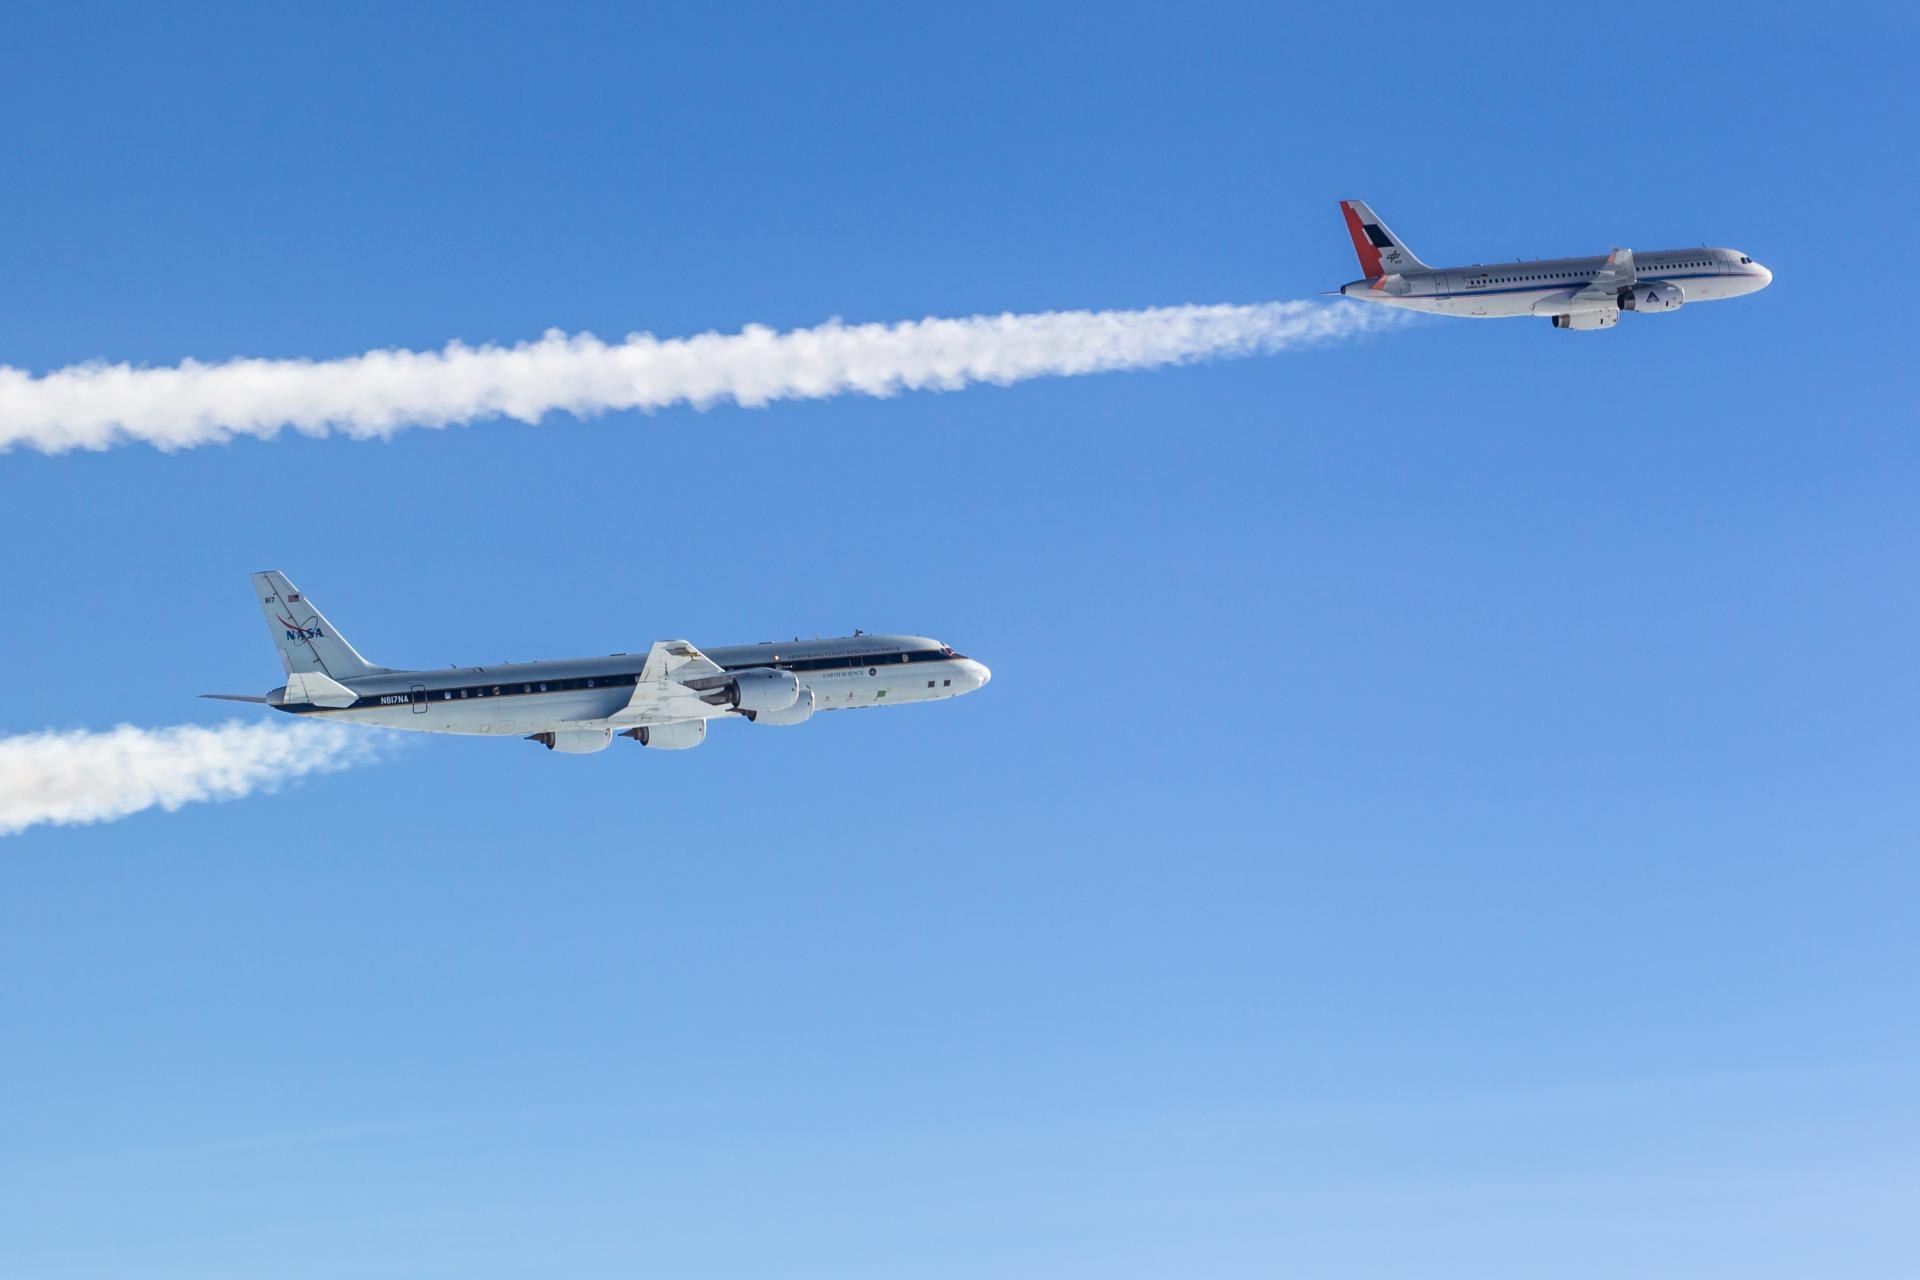 Flugzeuge NASA DC-8 und A320 ATRA des DLR im Flug